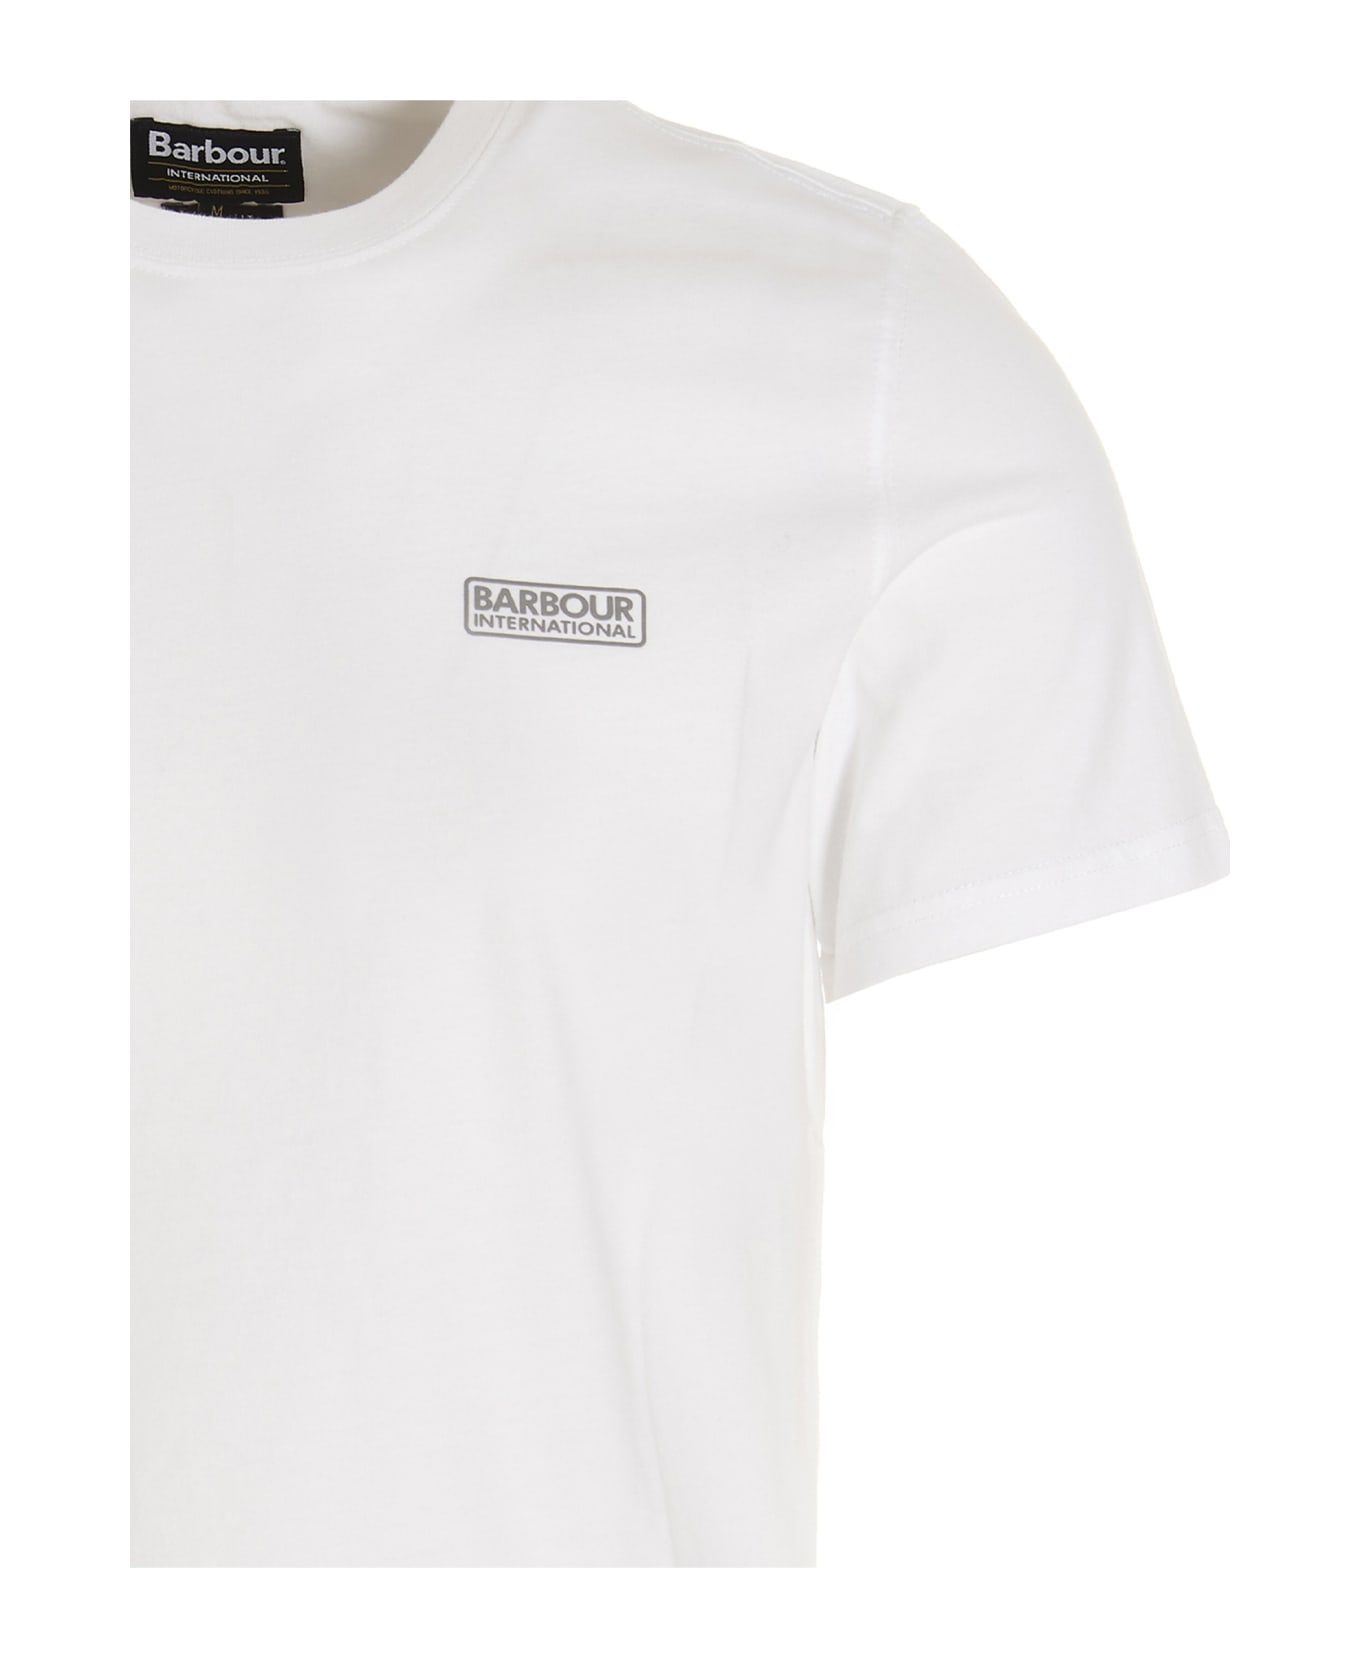 Barbour T-shirt 'small Logo' - White